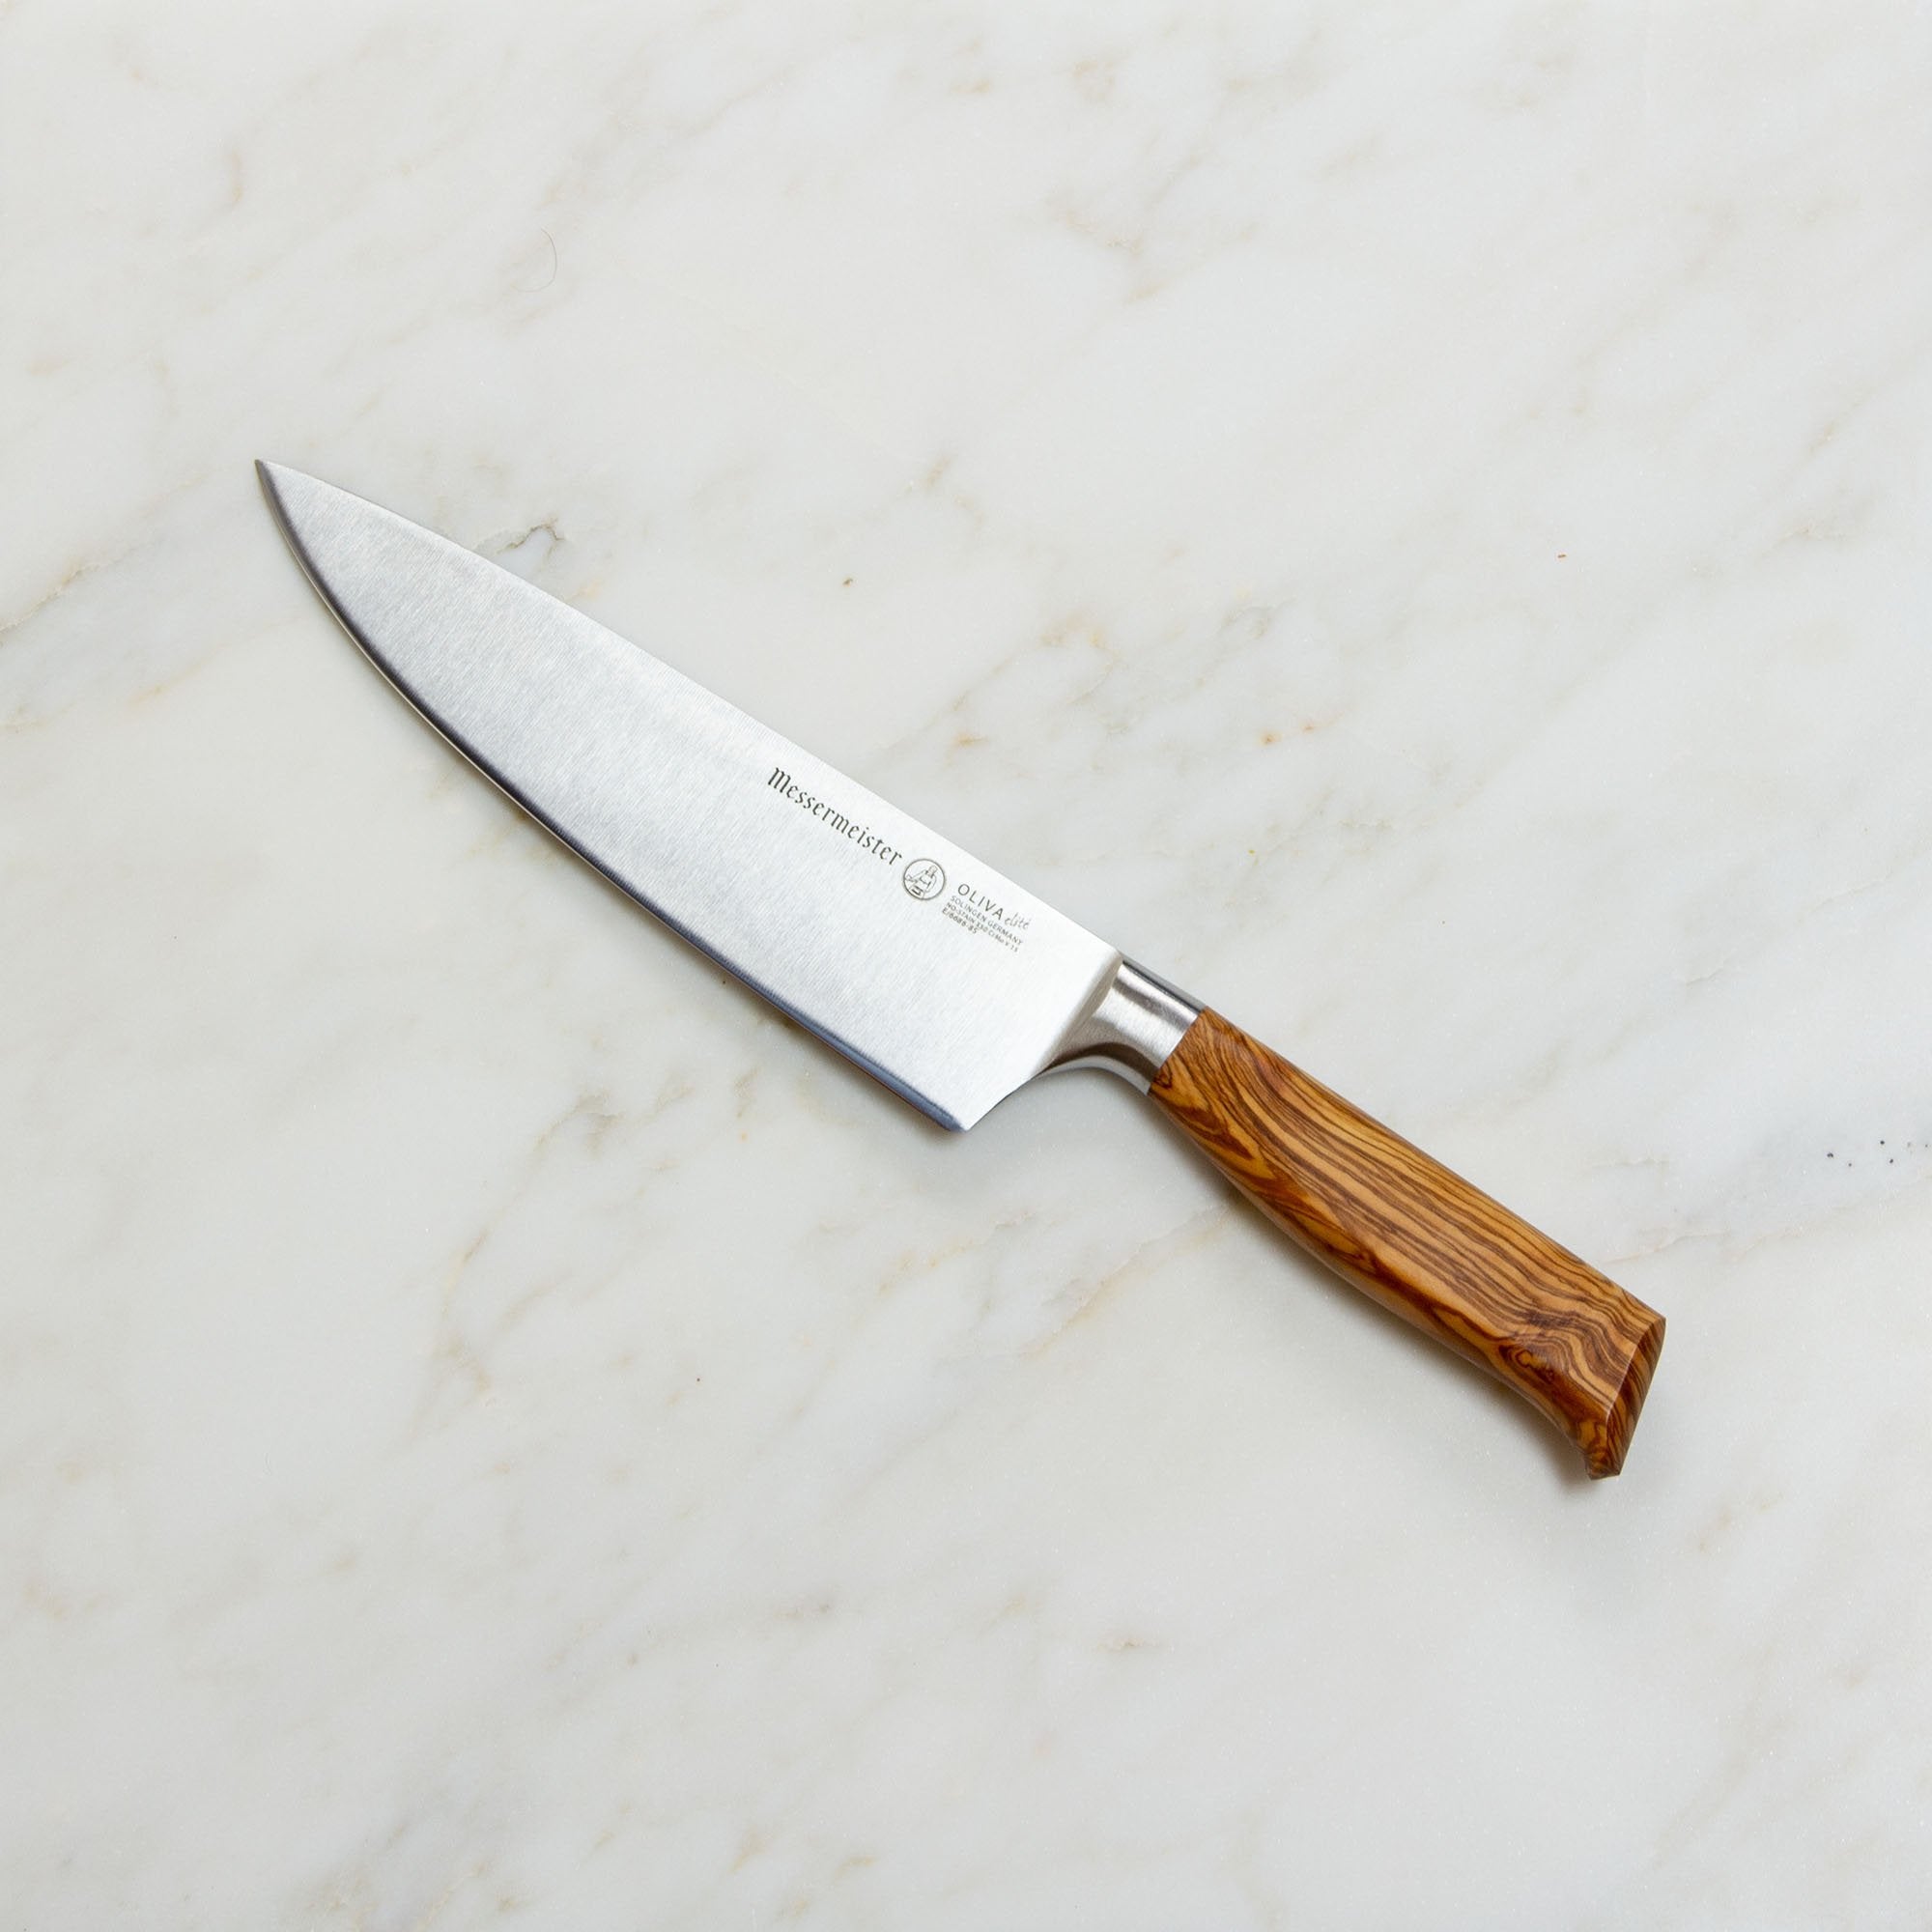 Messermeister Oliva Elite Stealth Chef's Knife 10